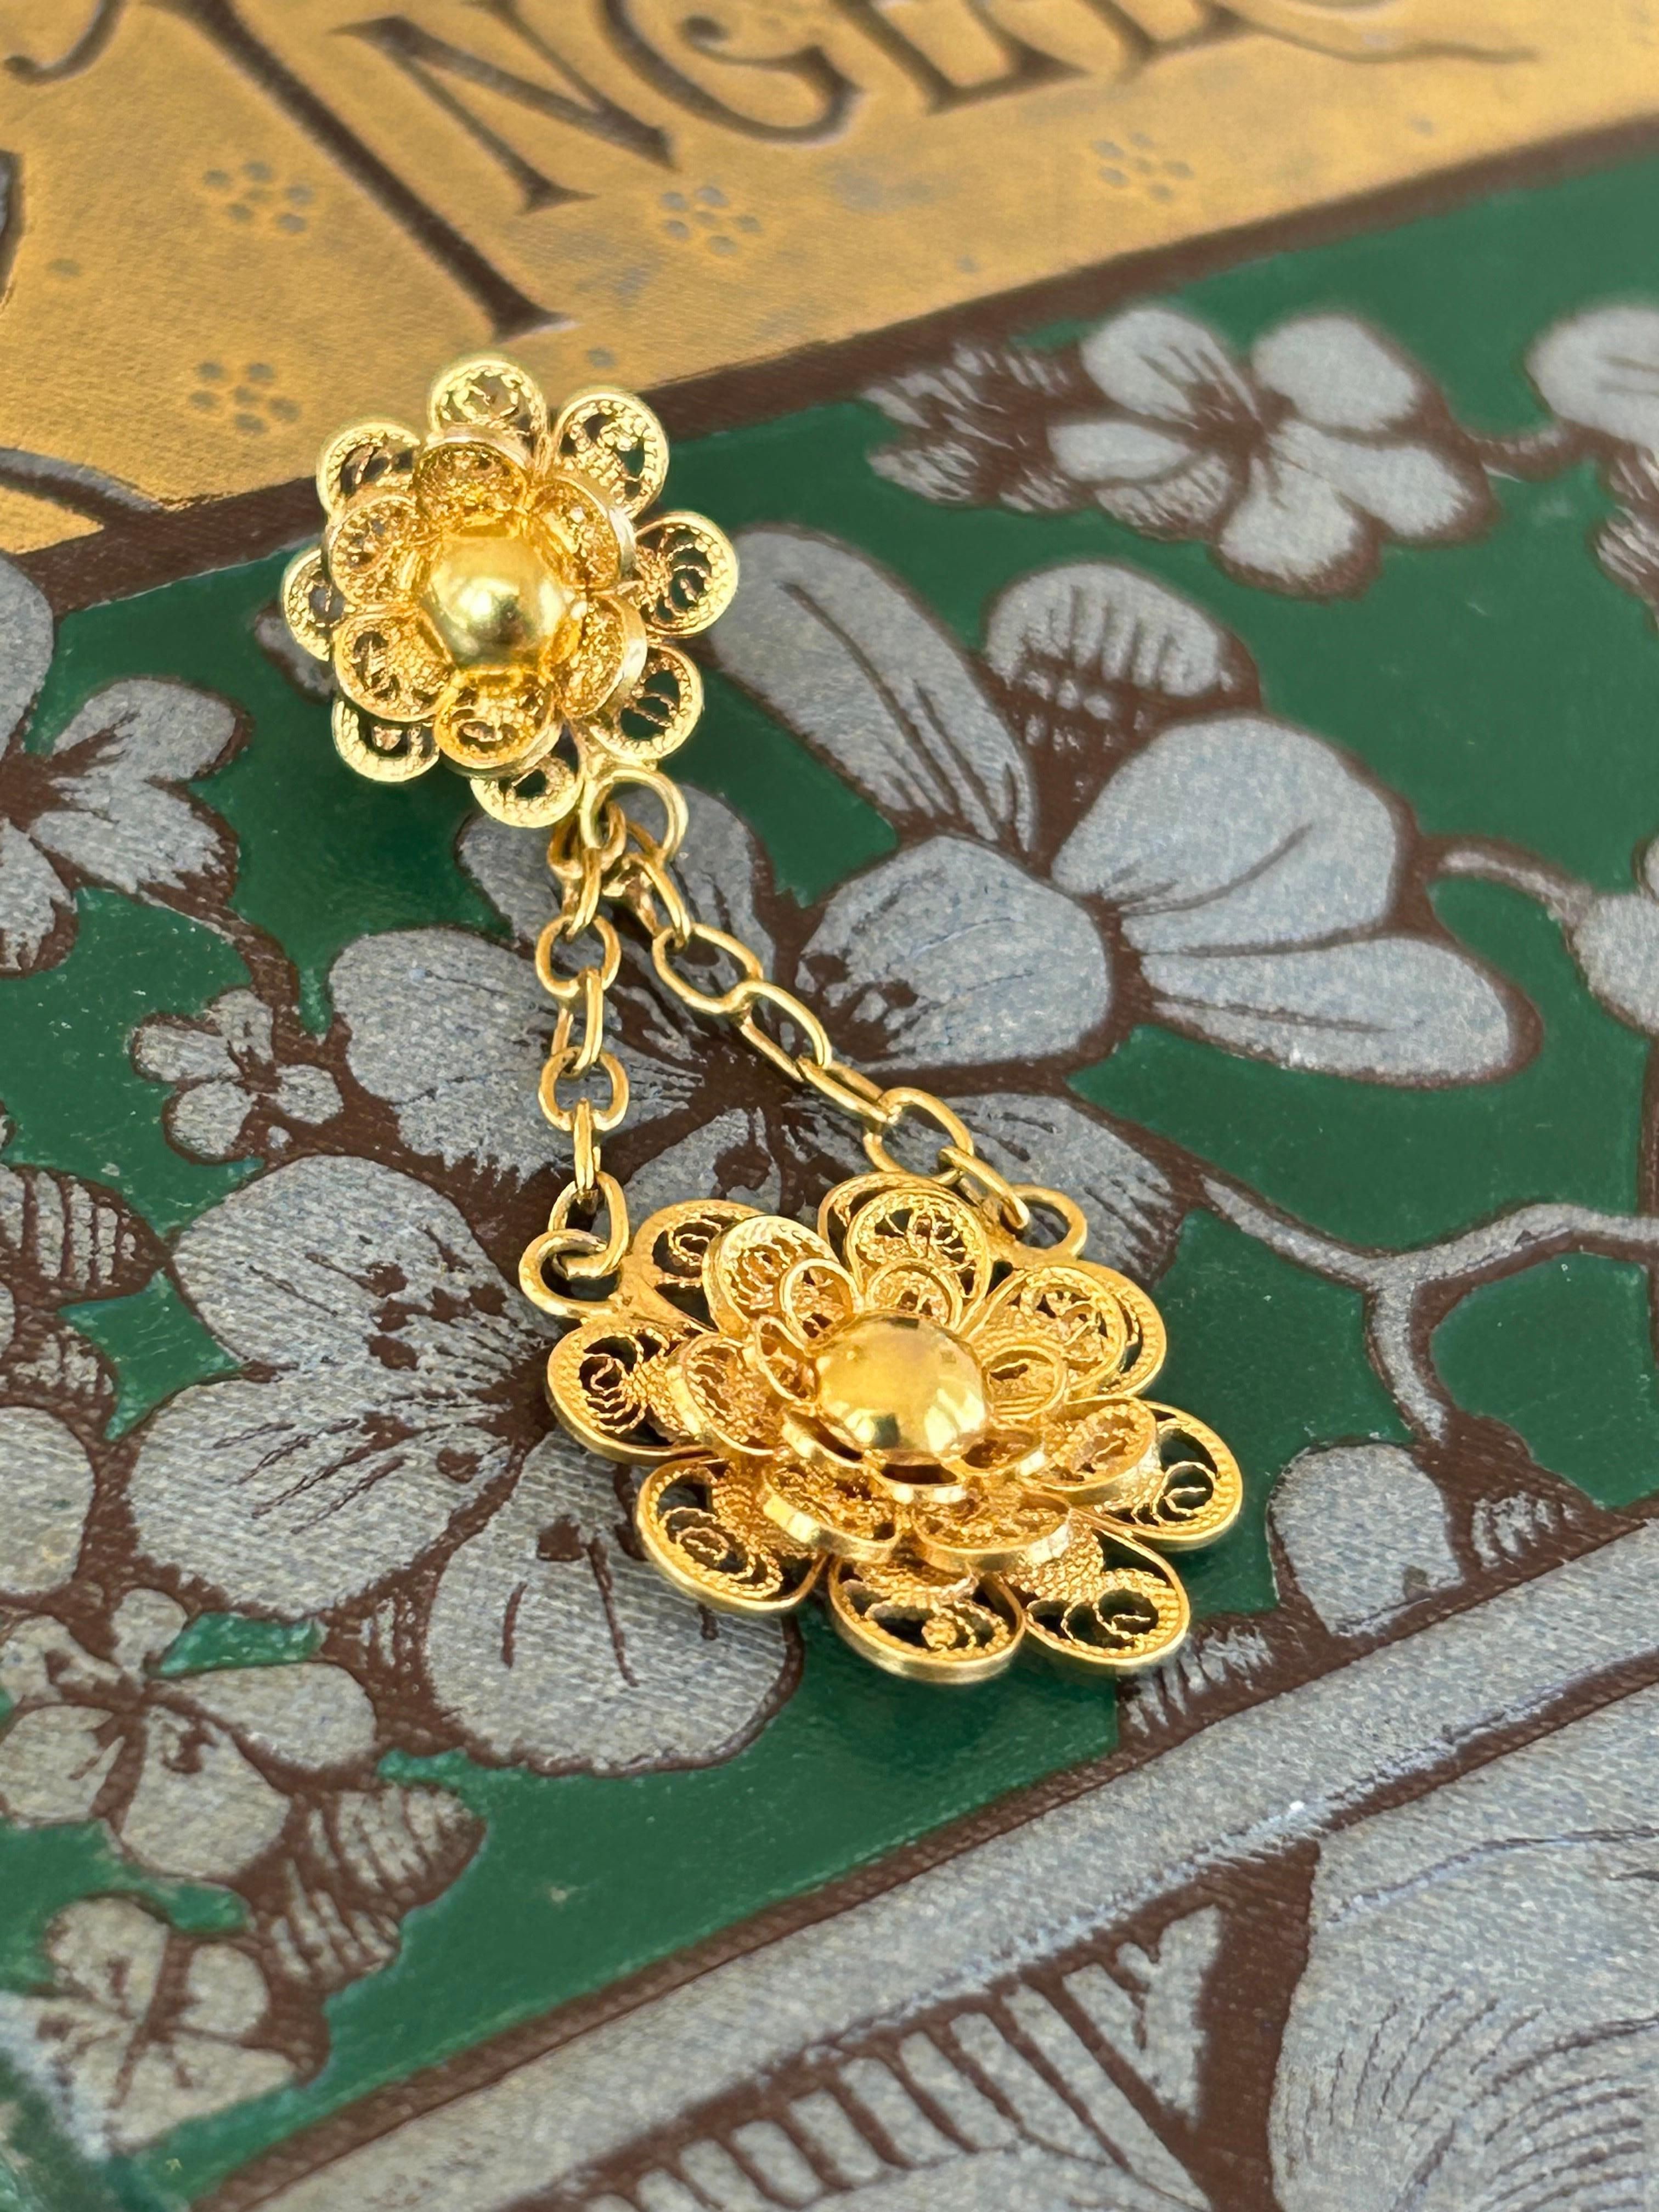 Antique Victorian Etruscan Revival Filigree 14k Gold Dangle Earrings. Hallmarks: 585 Dutch assay mark. LxW: 4.3 x 1.6 cm. Weight: 5.17 grams.